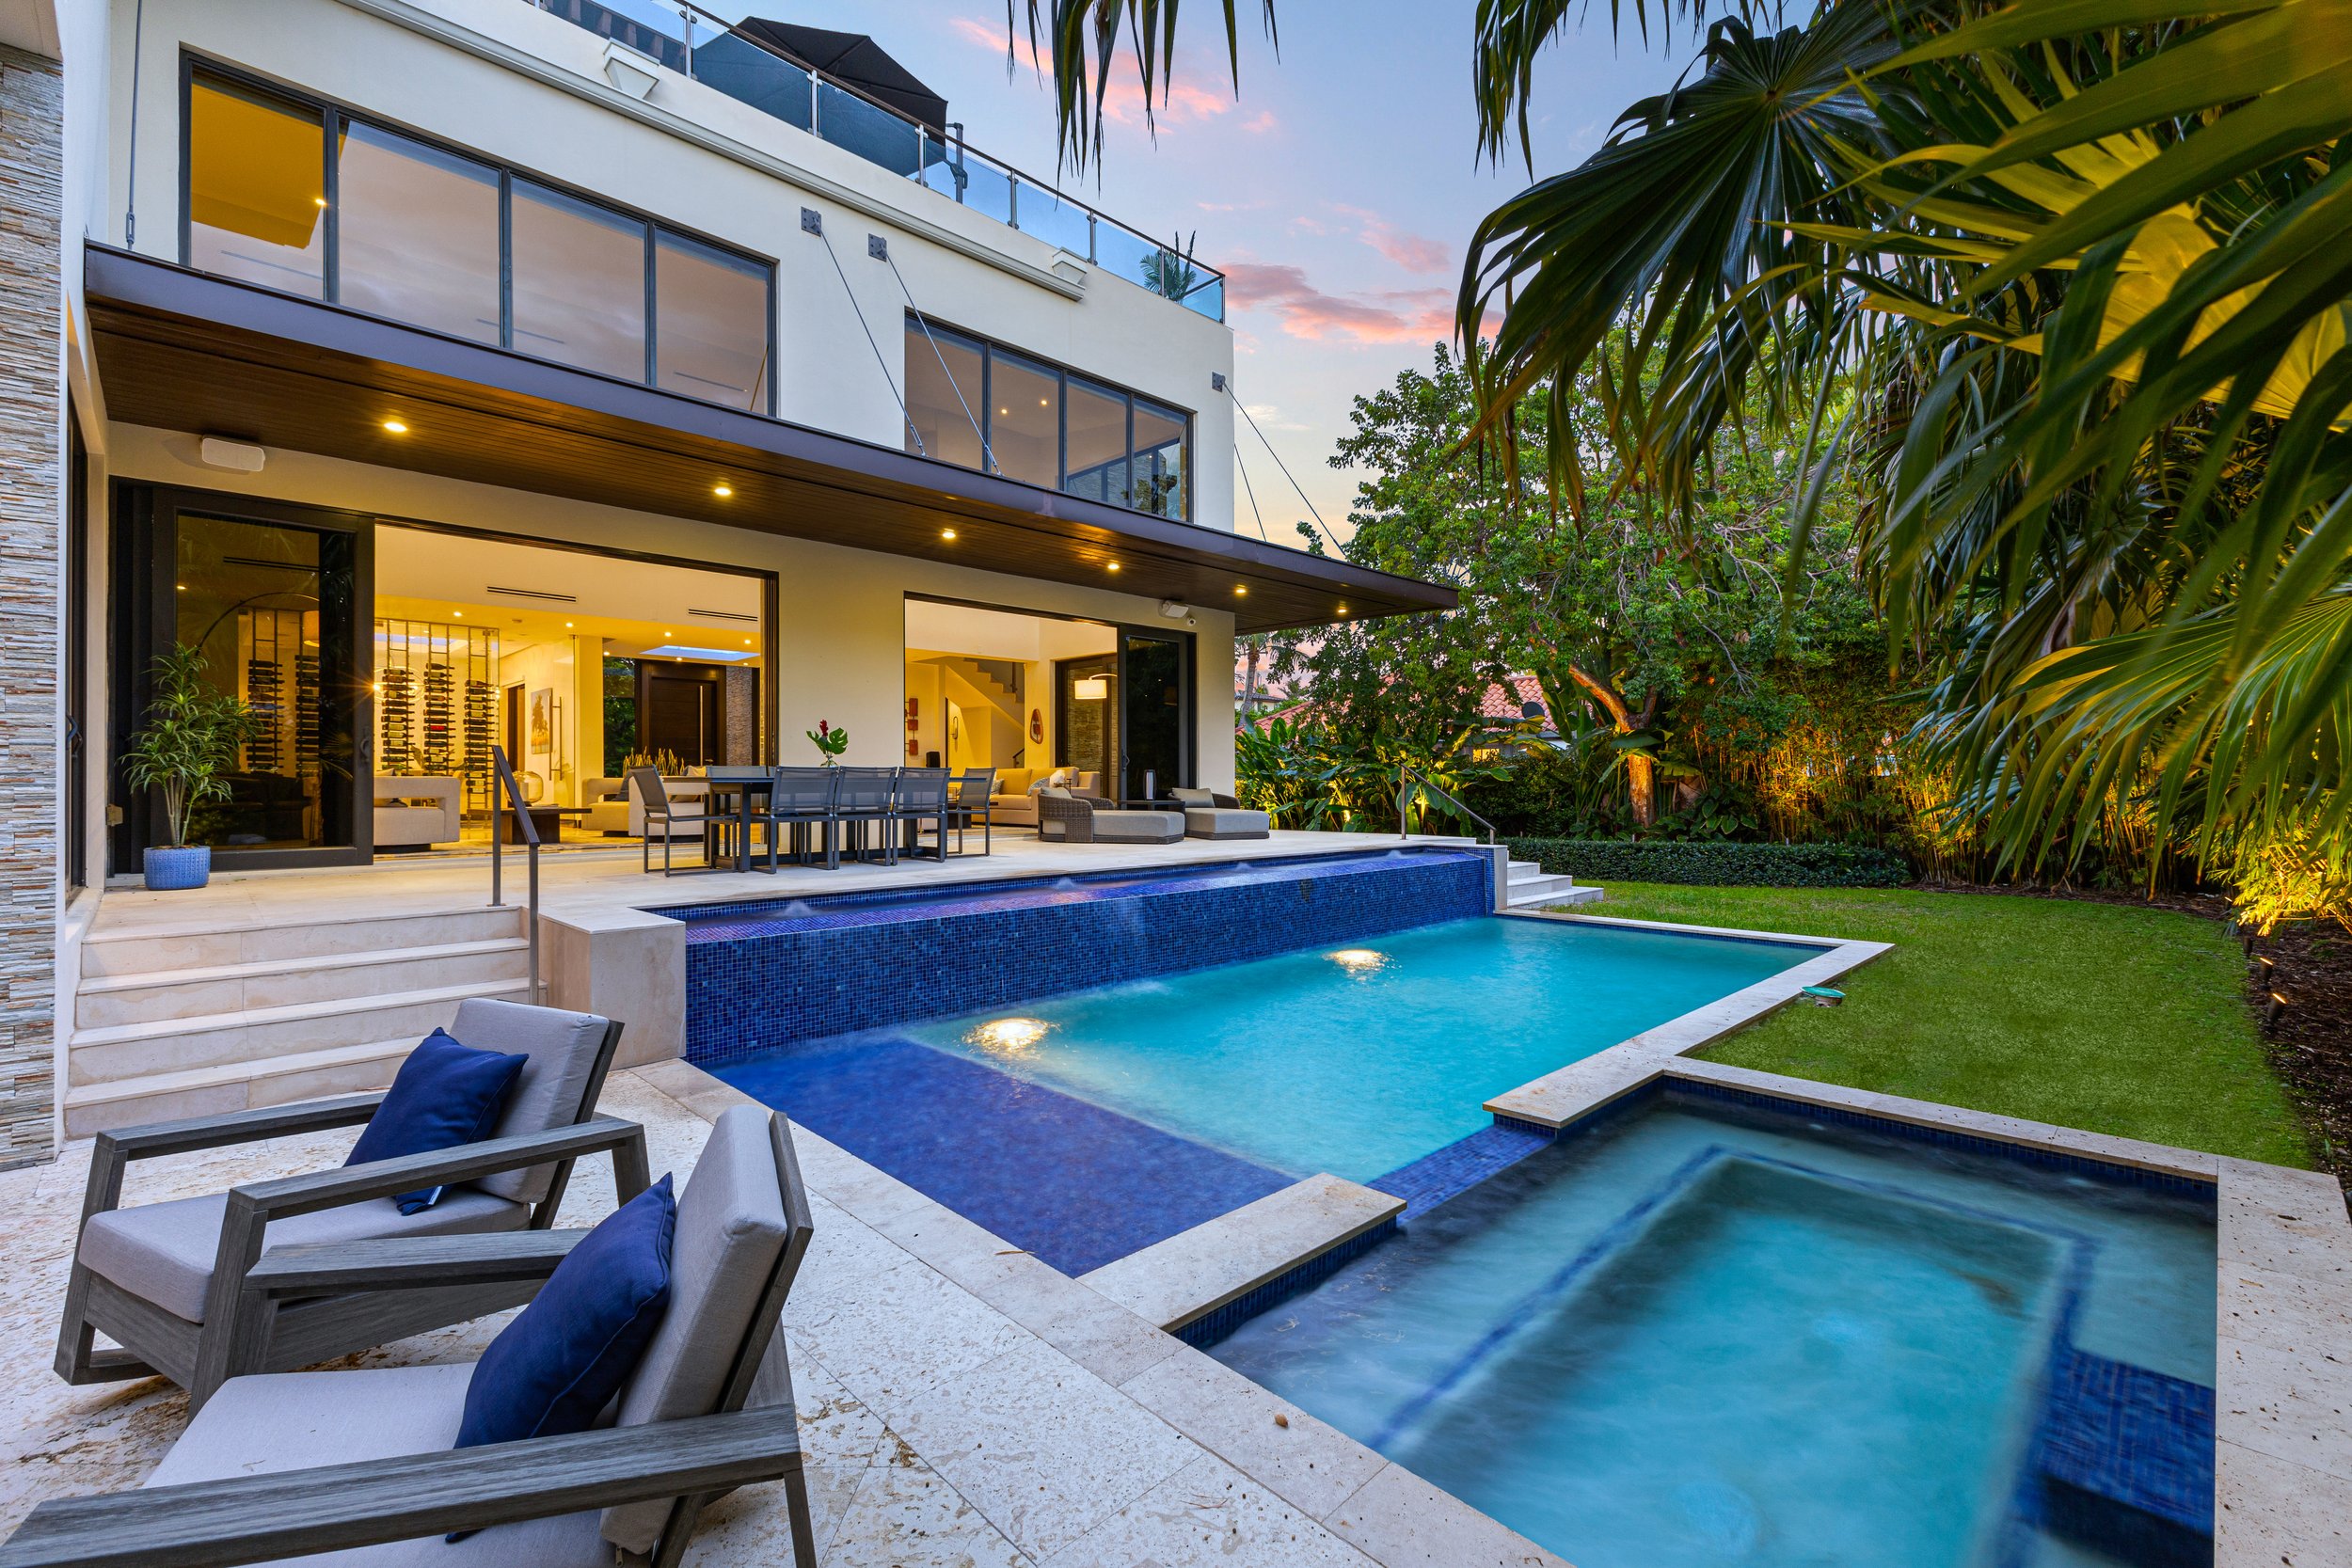 Key Biscayne Non-Waterfront Home on Mashta Island Sells For $7.3 Million 6.jpg